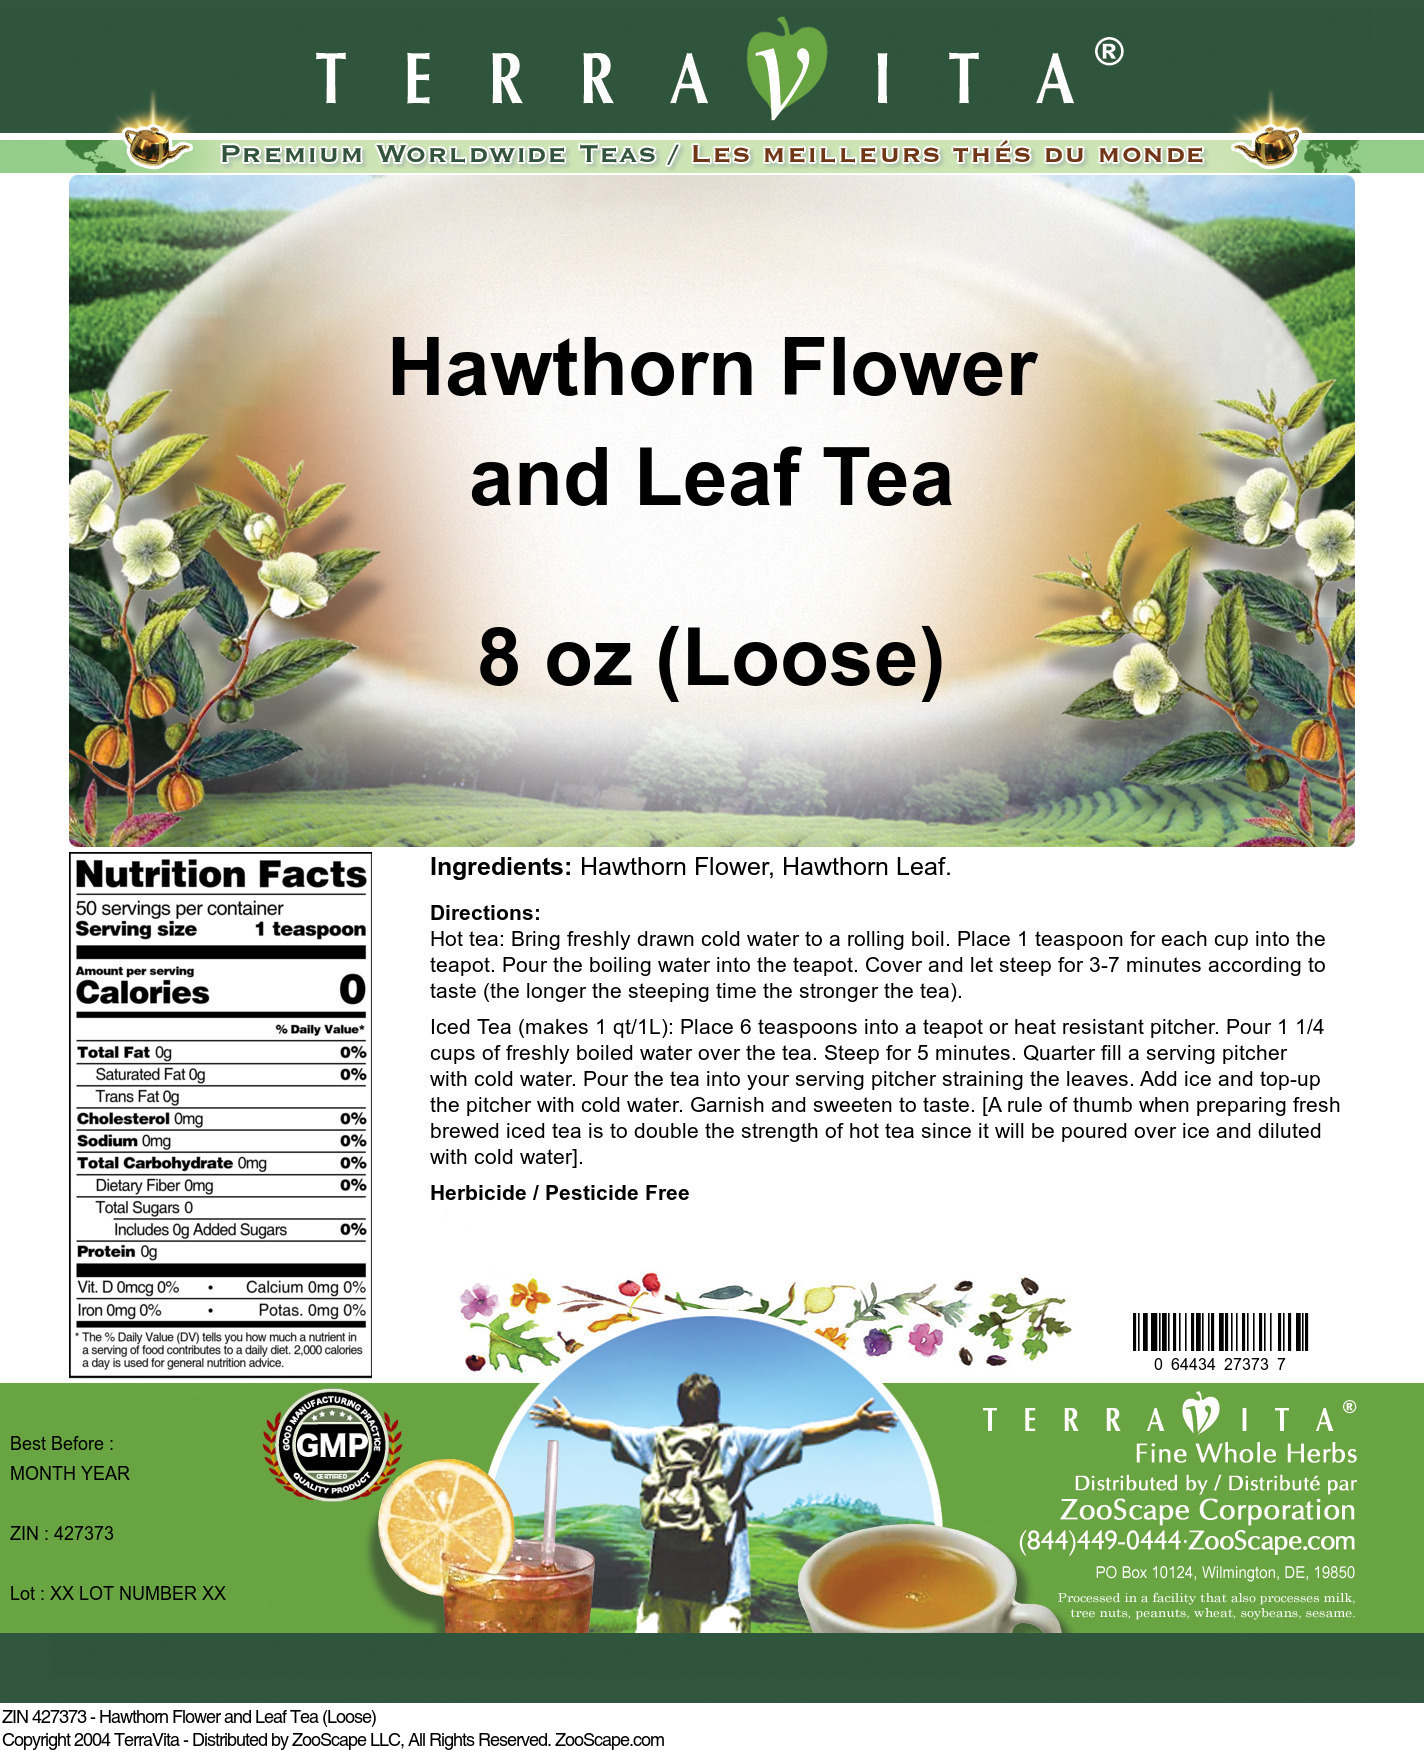 Hawthorn Flower and Leaf Tea (Loose) - Label